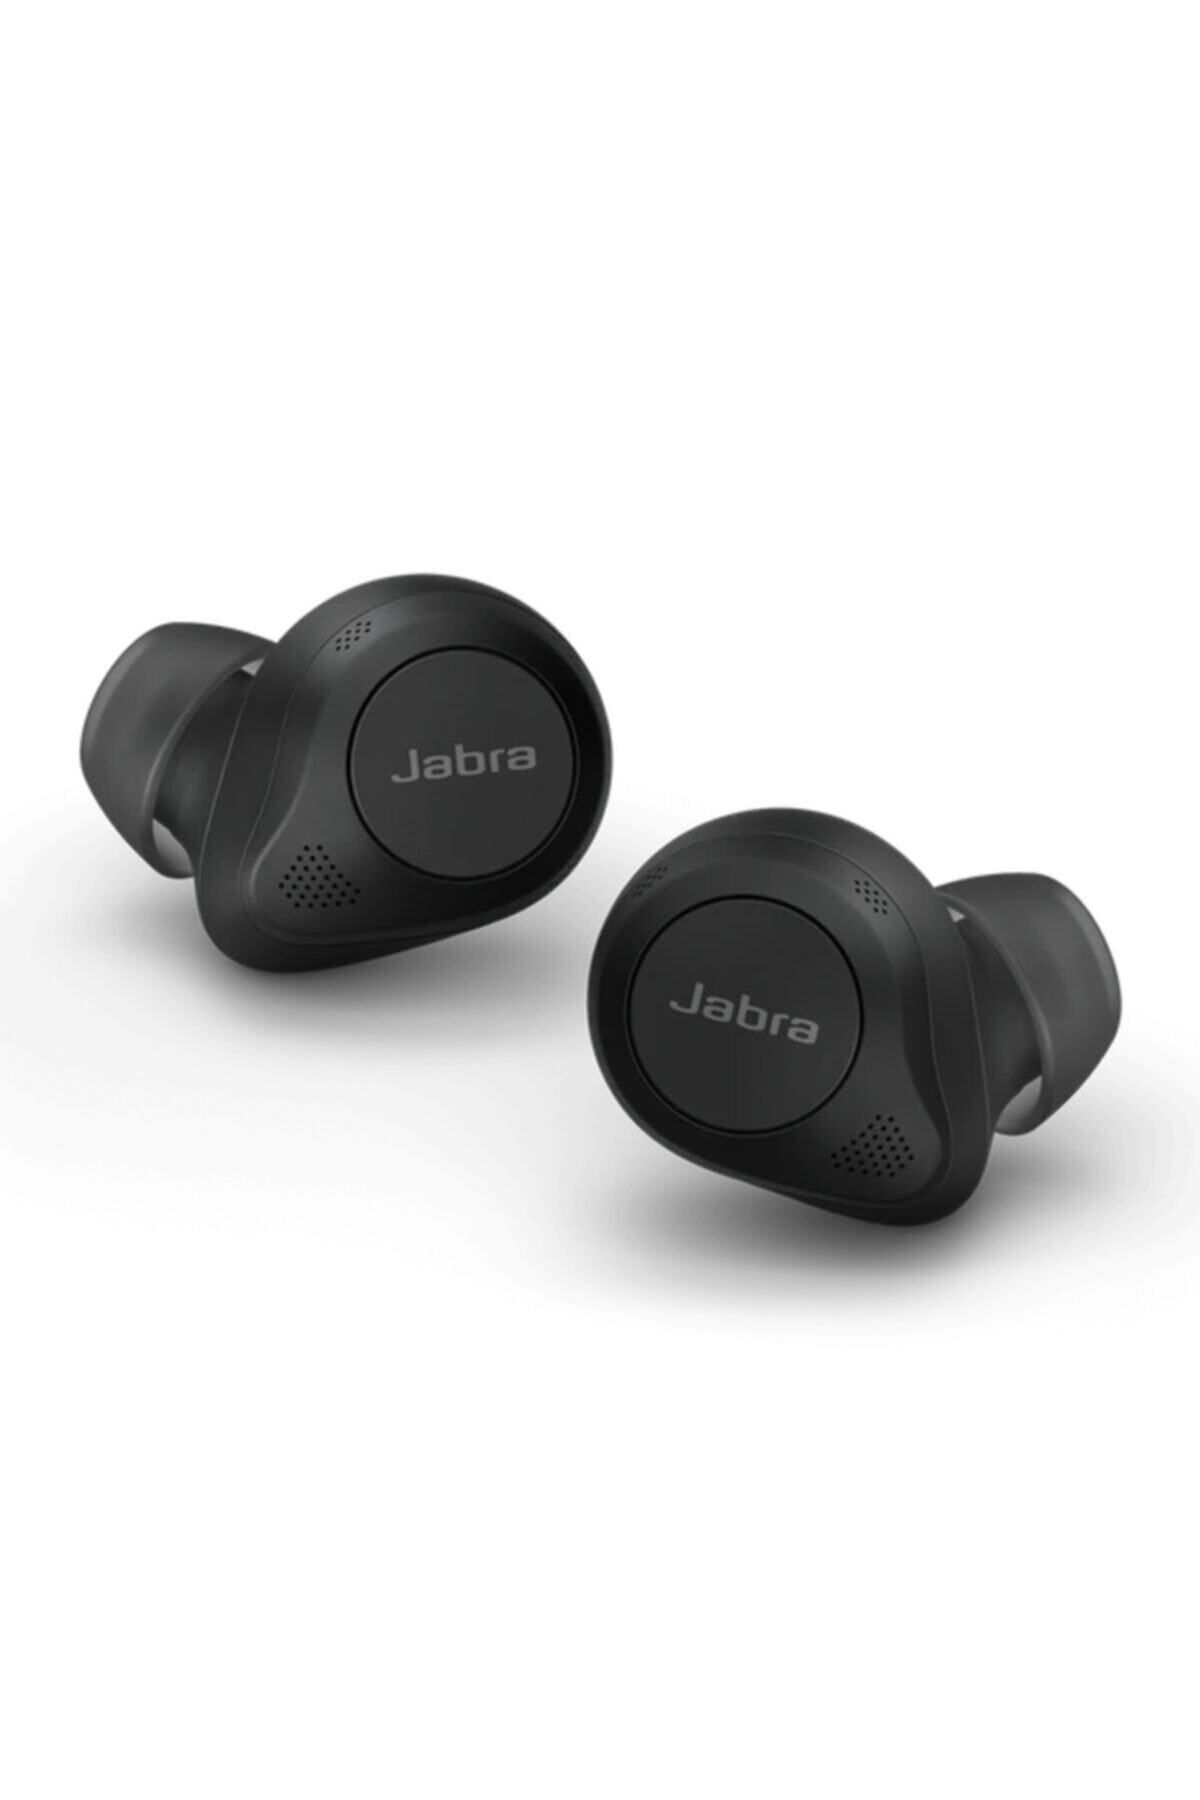 Jabra Elite 85t Gelişmiş Aktif Gürültü Önleyici-bluetooth Kulaklık Üstün Ses Konforlu - Siyah